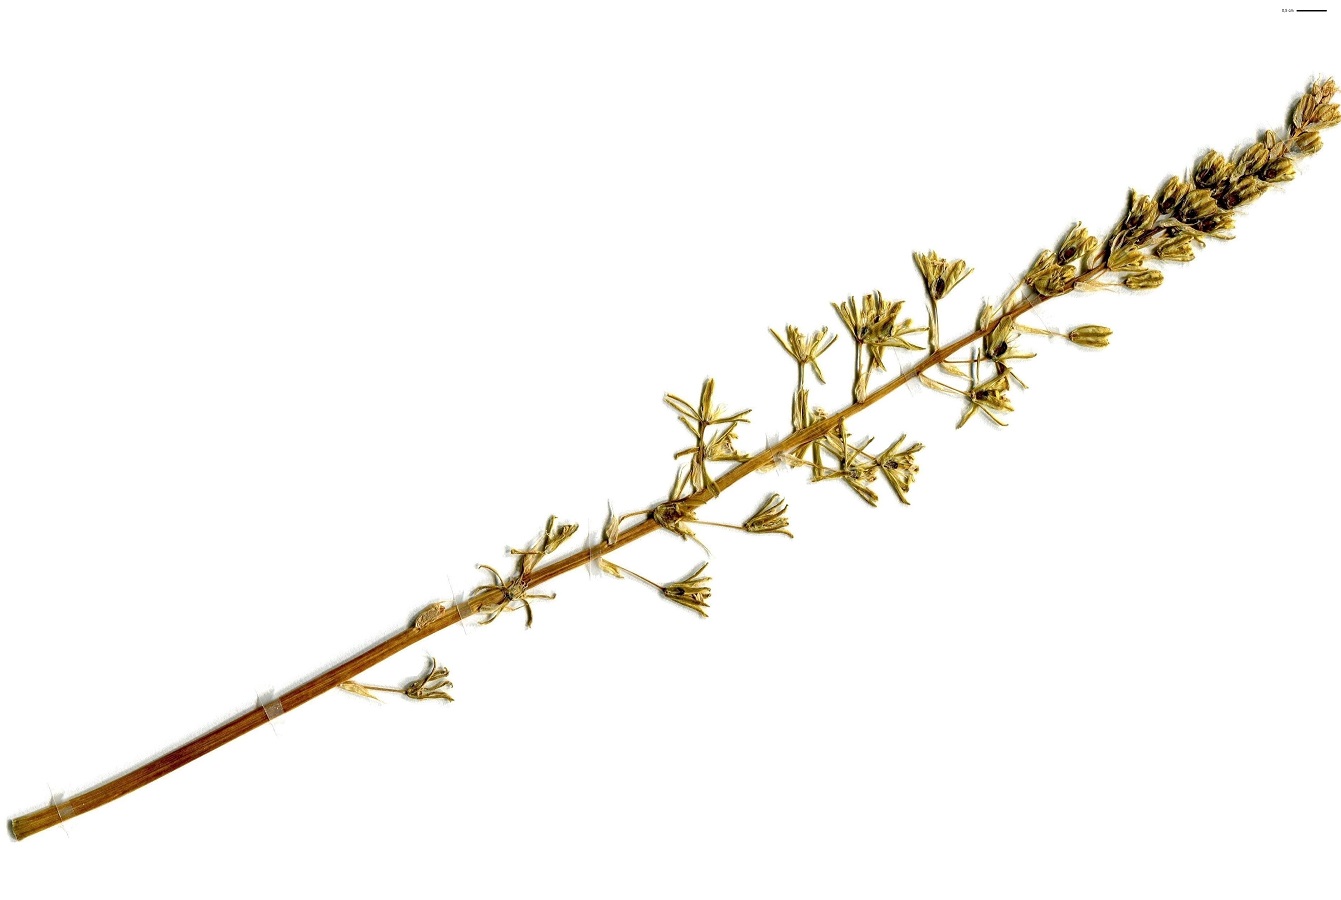 Loncomelos pyrenaicum subsp. pyrenaicum (Asparagaceae)